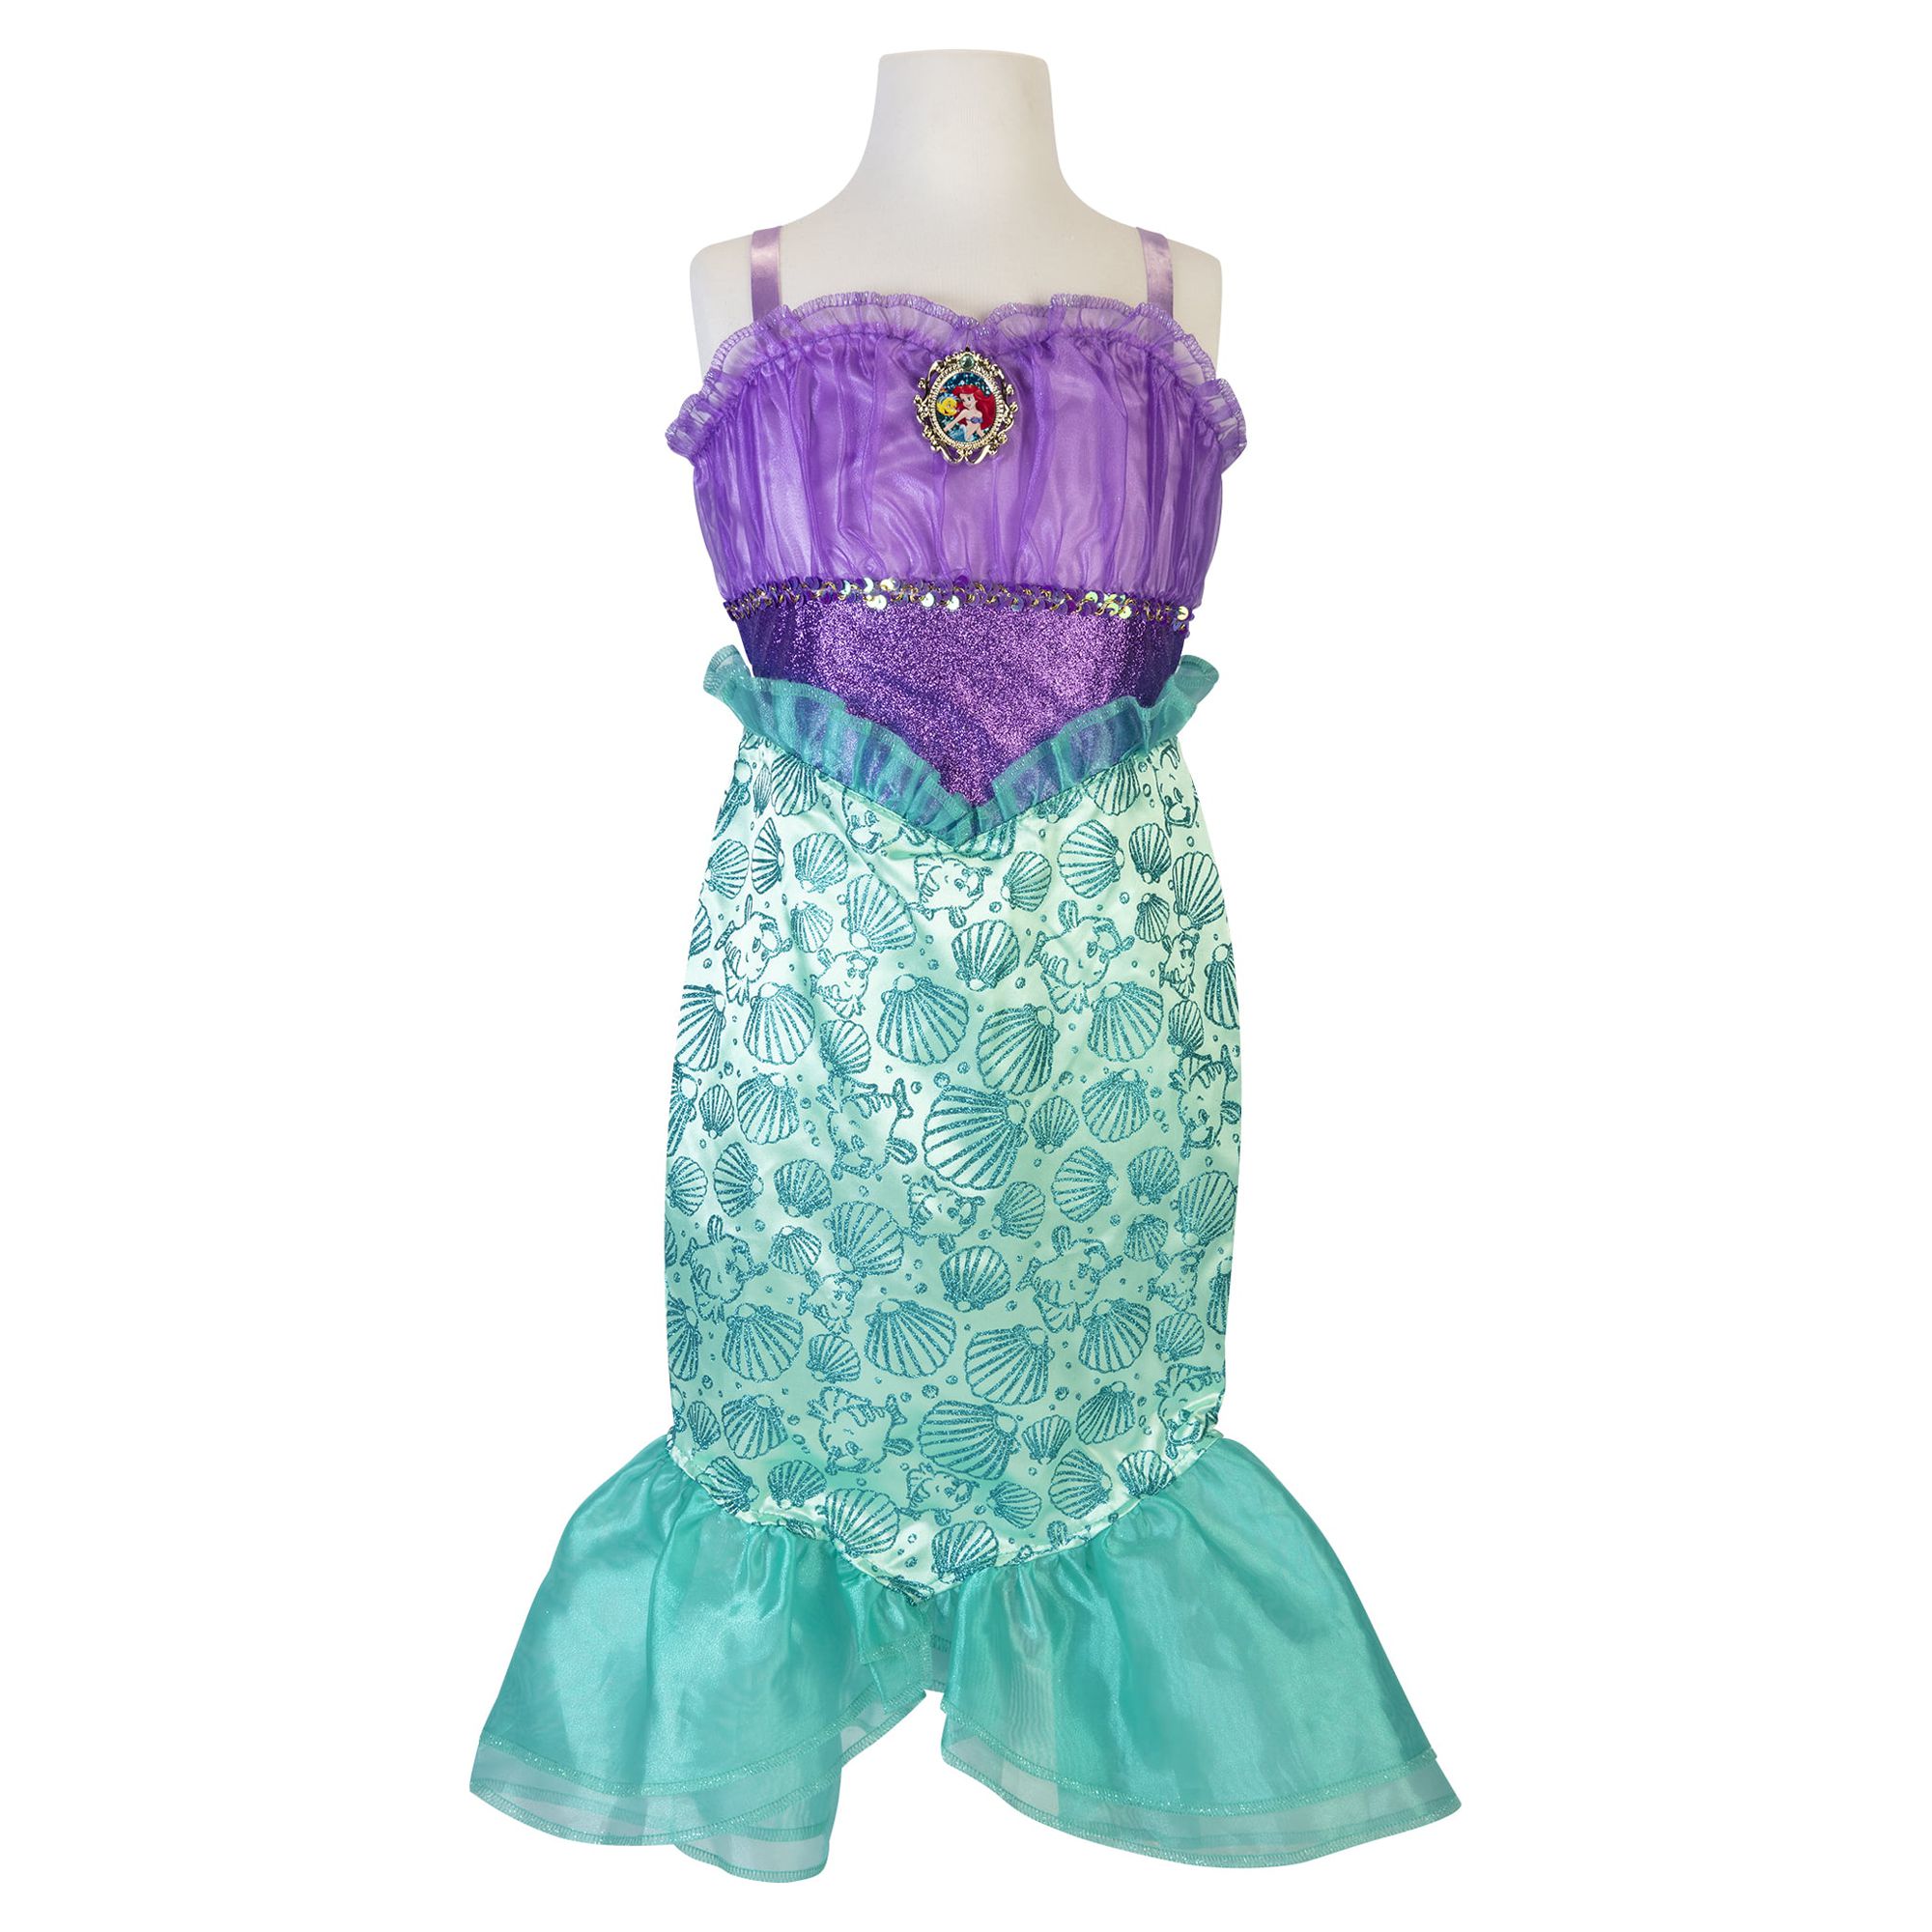 Disney Princess Ariel Children's Dress Perfect for Halloween or Dress Up - image 5 of 6